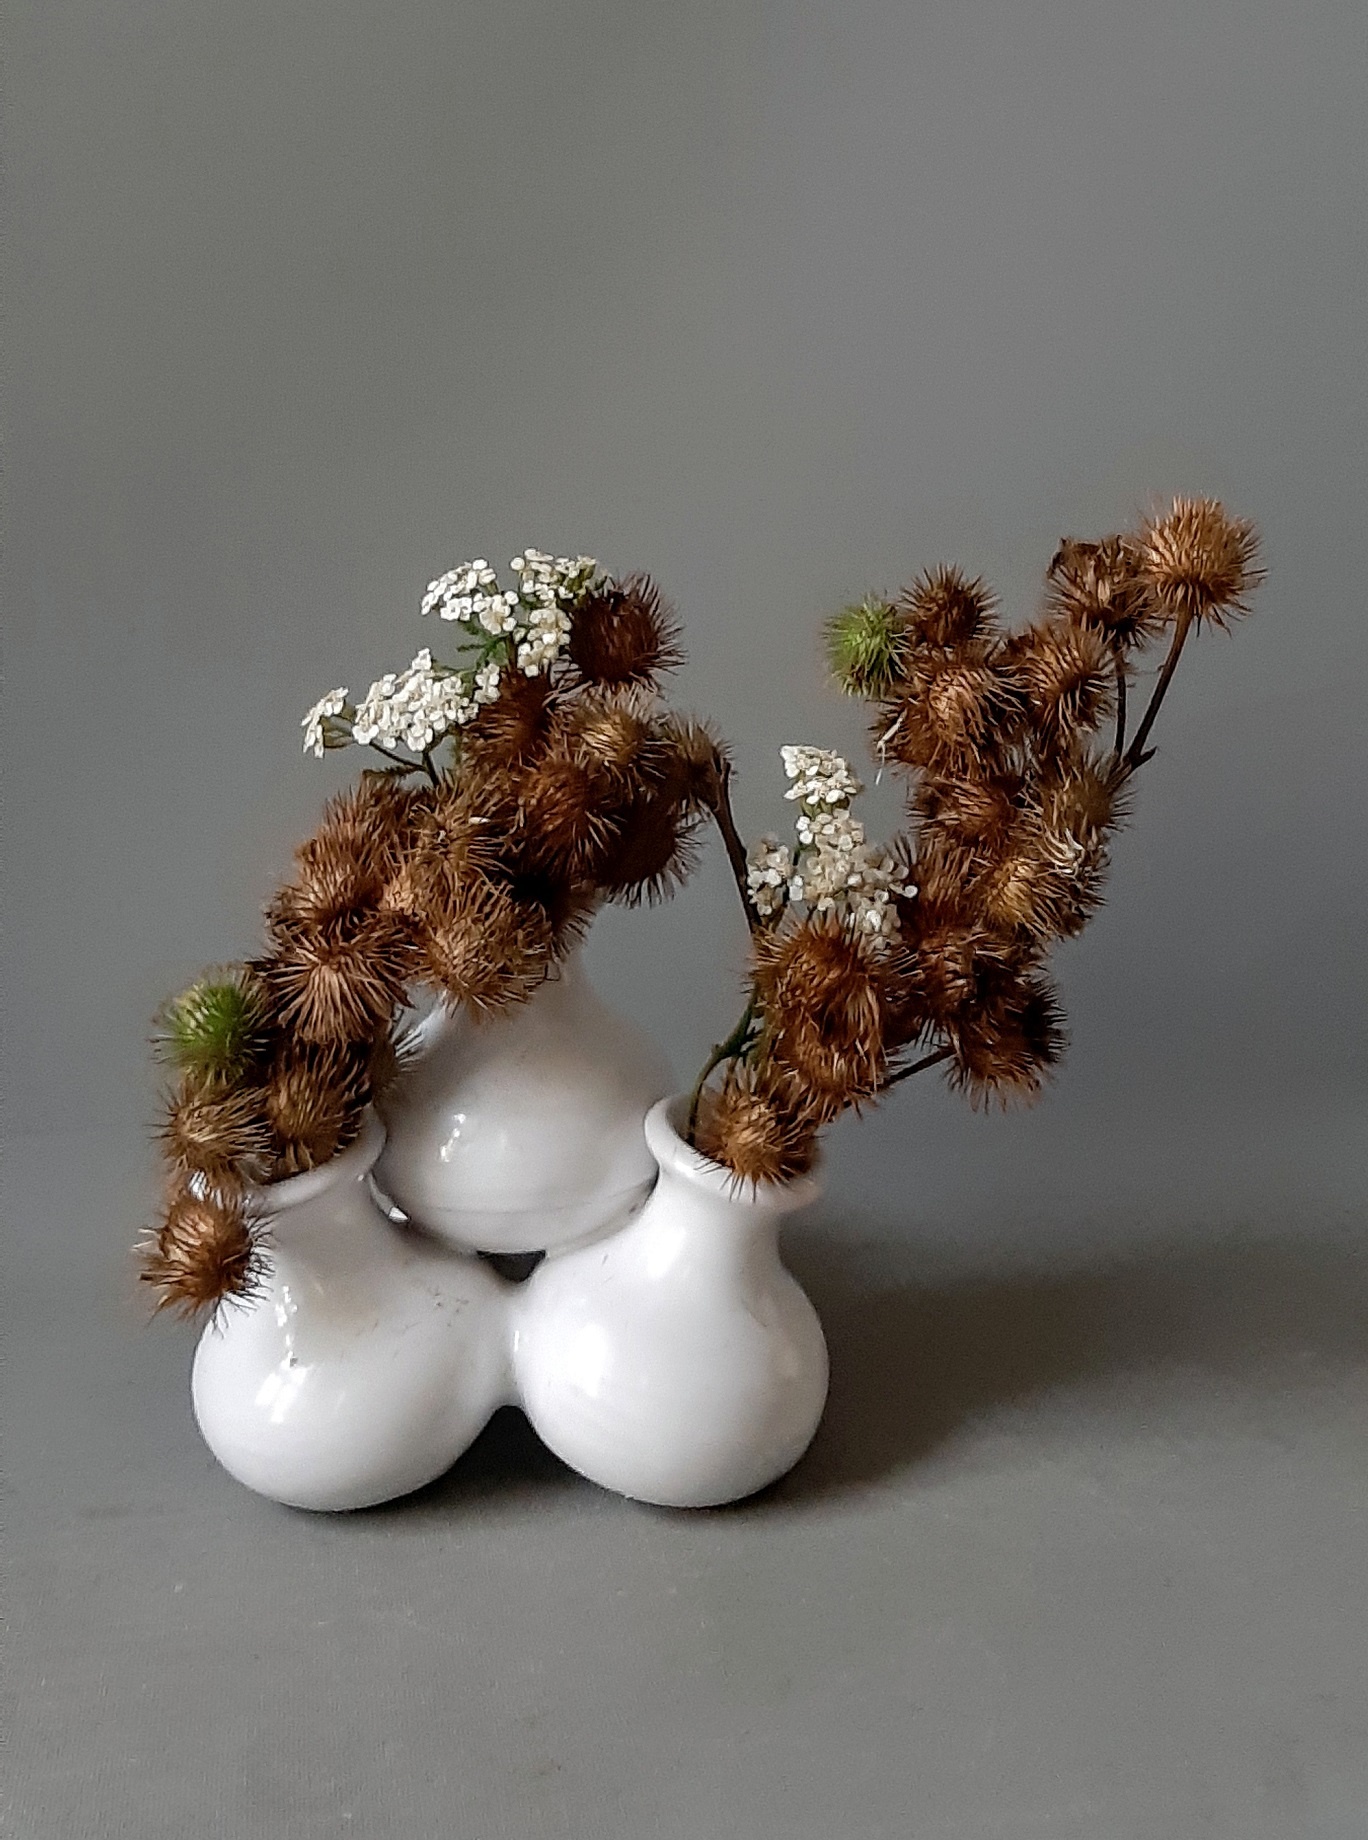 Miniatur Ikebana von Ingrid Truttmann